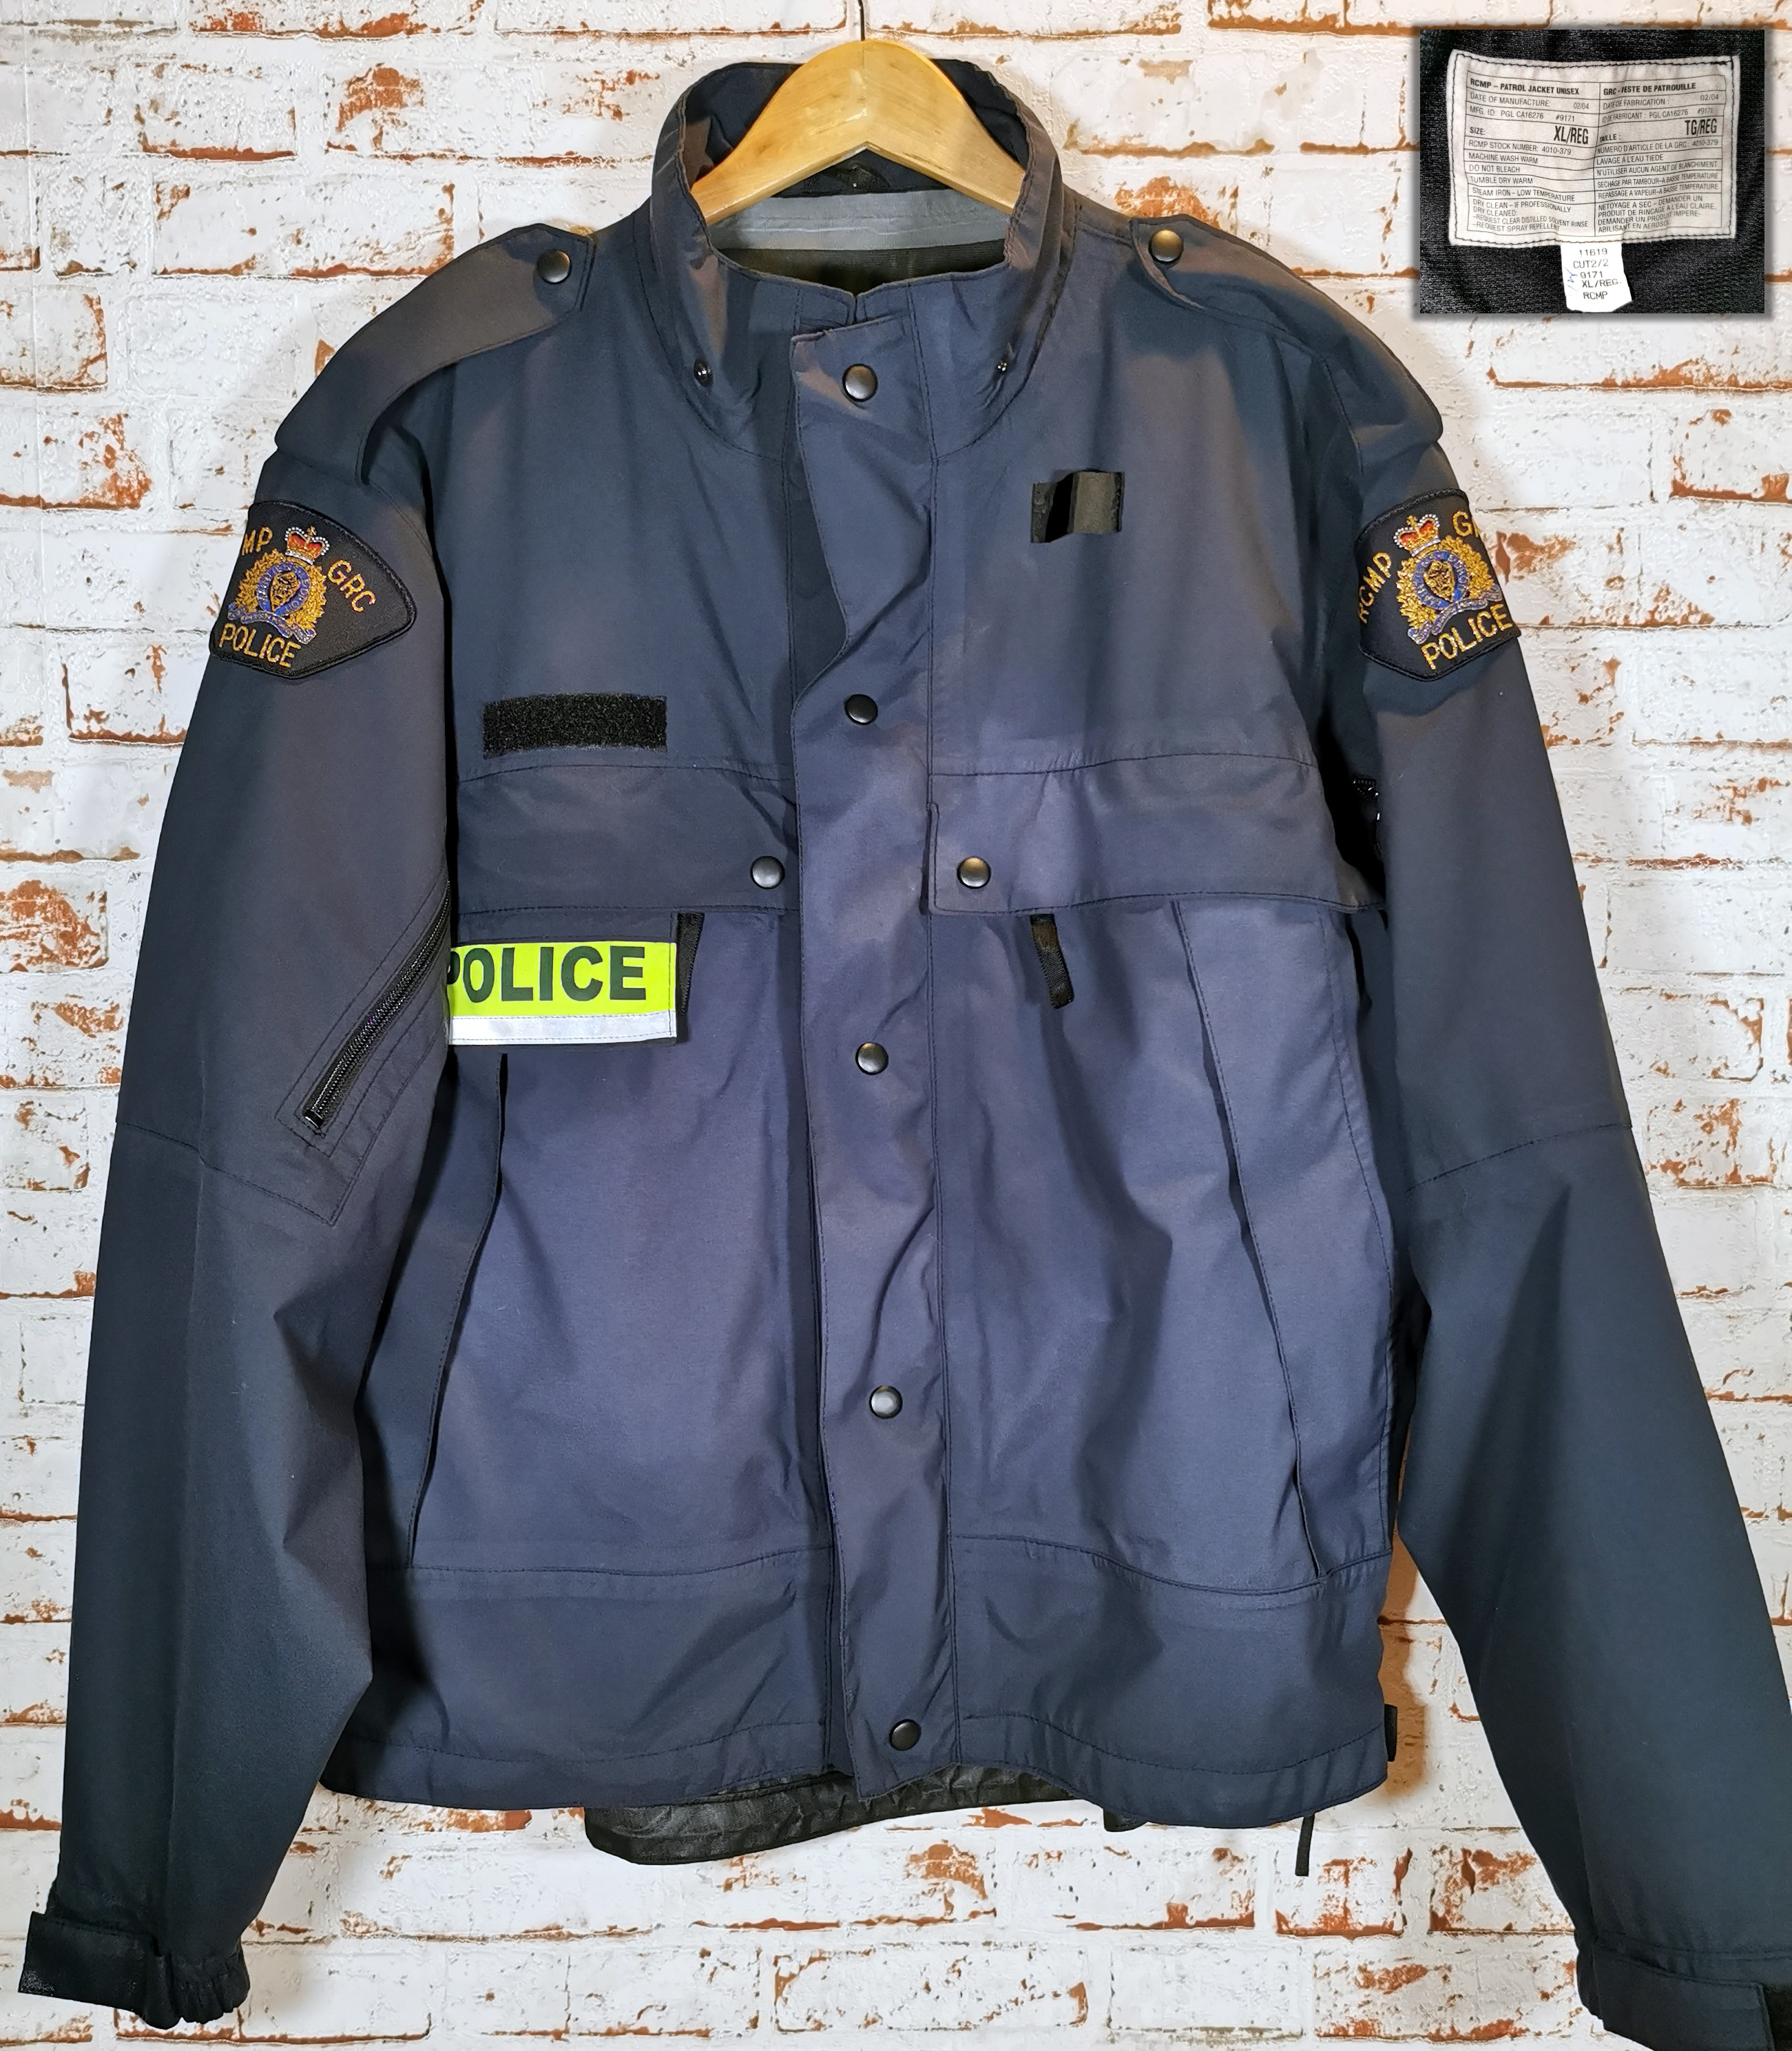 Patrol Jacket